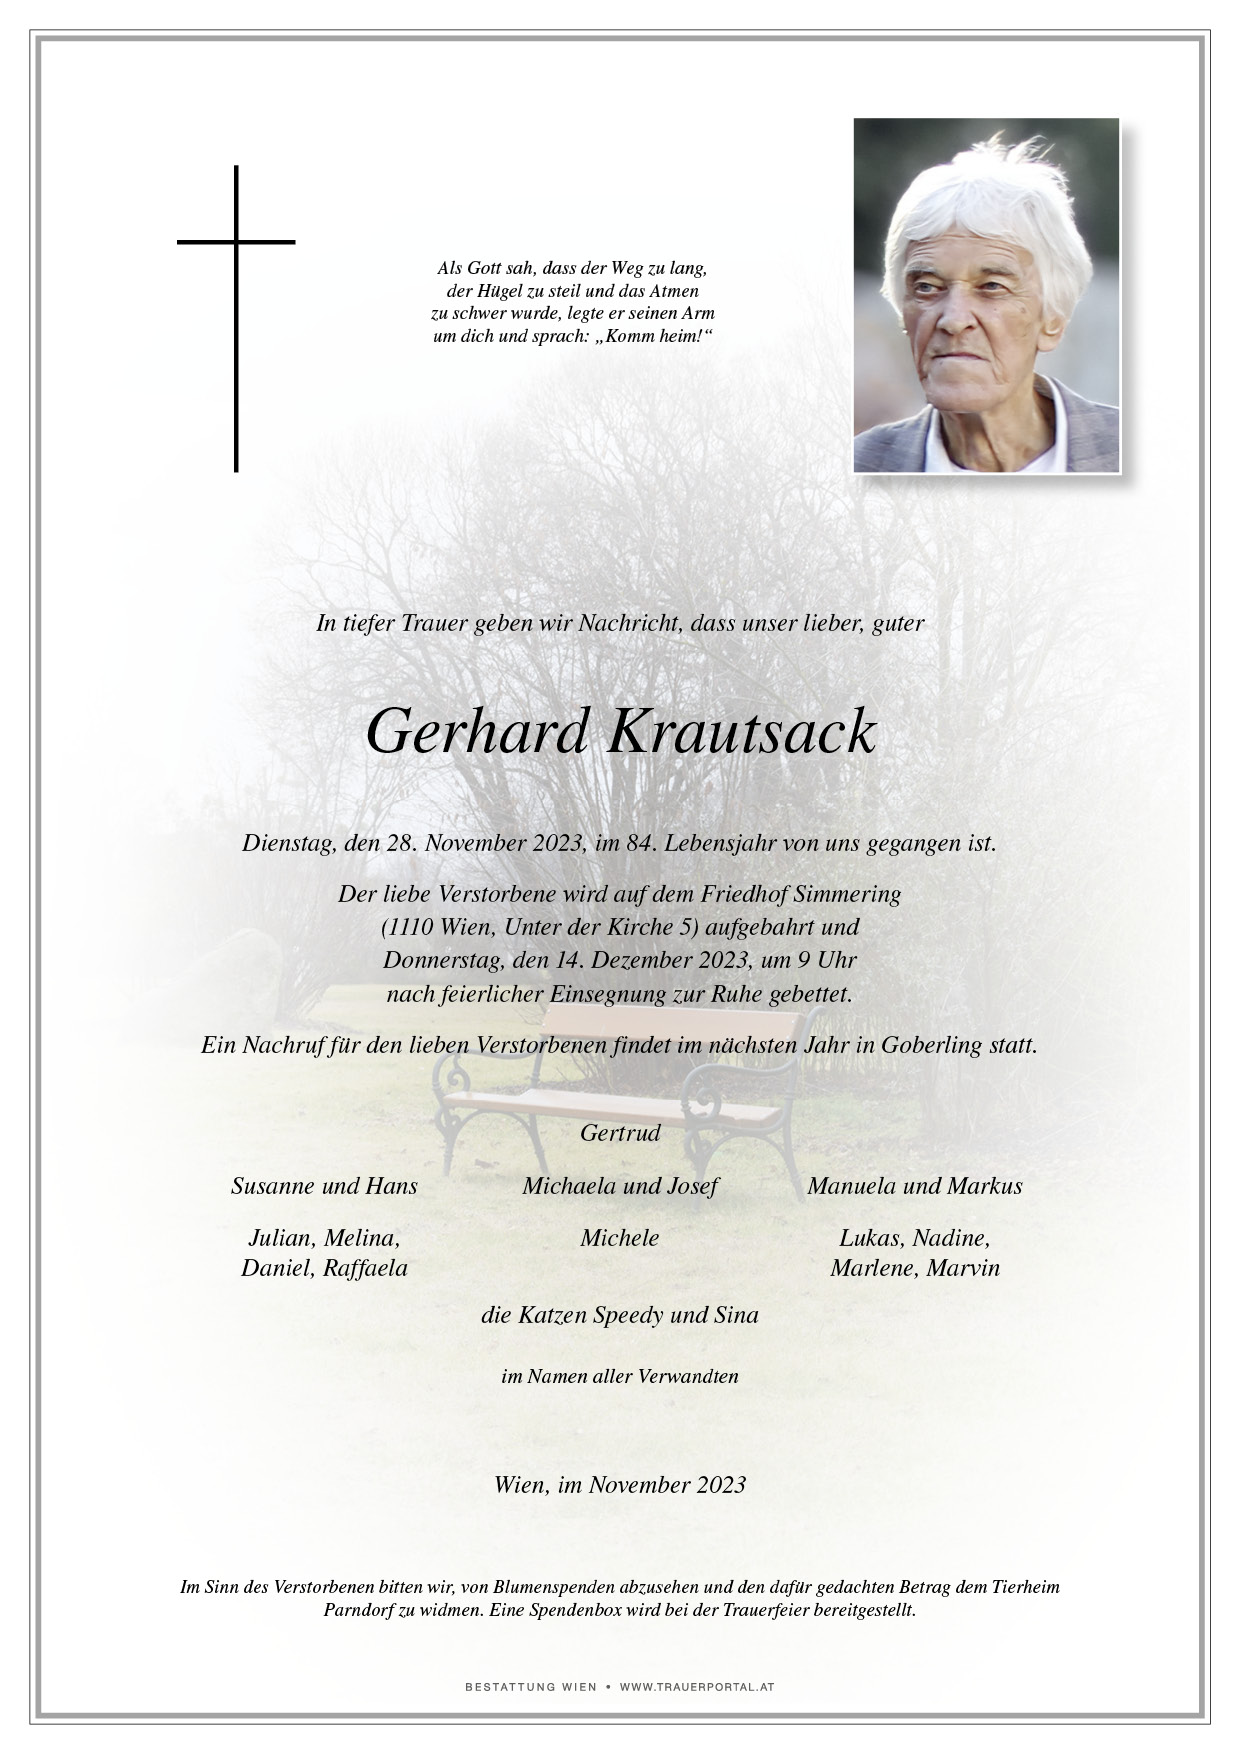 Gerhard Krautsack